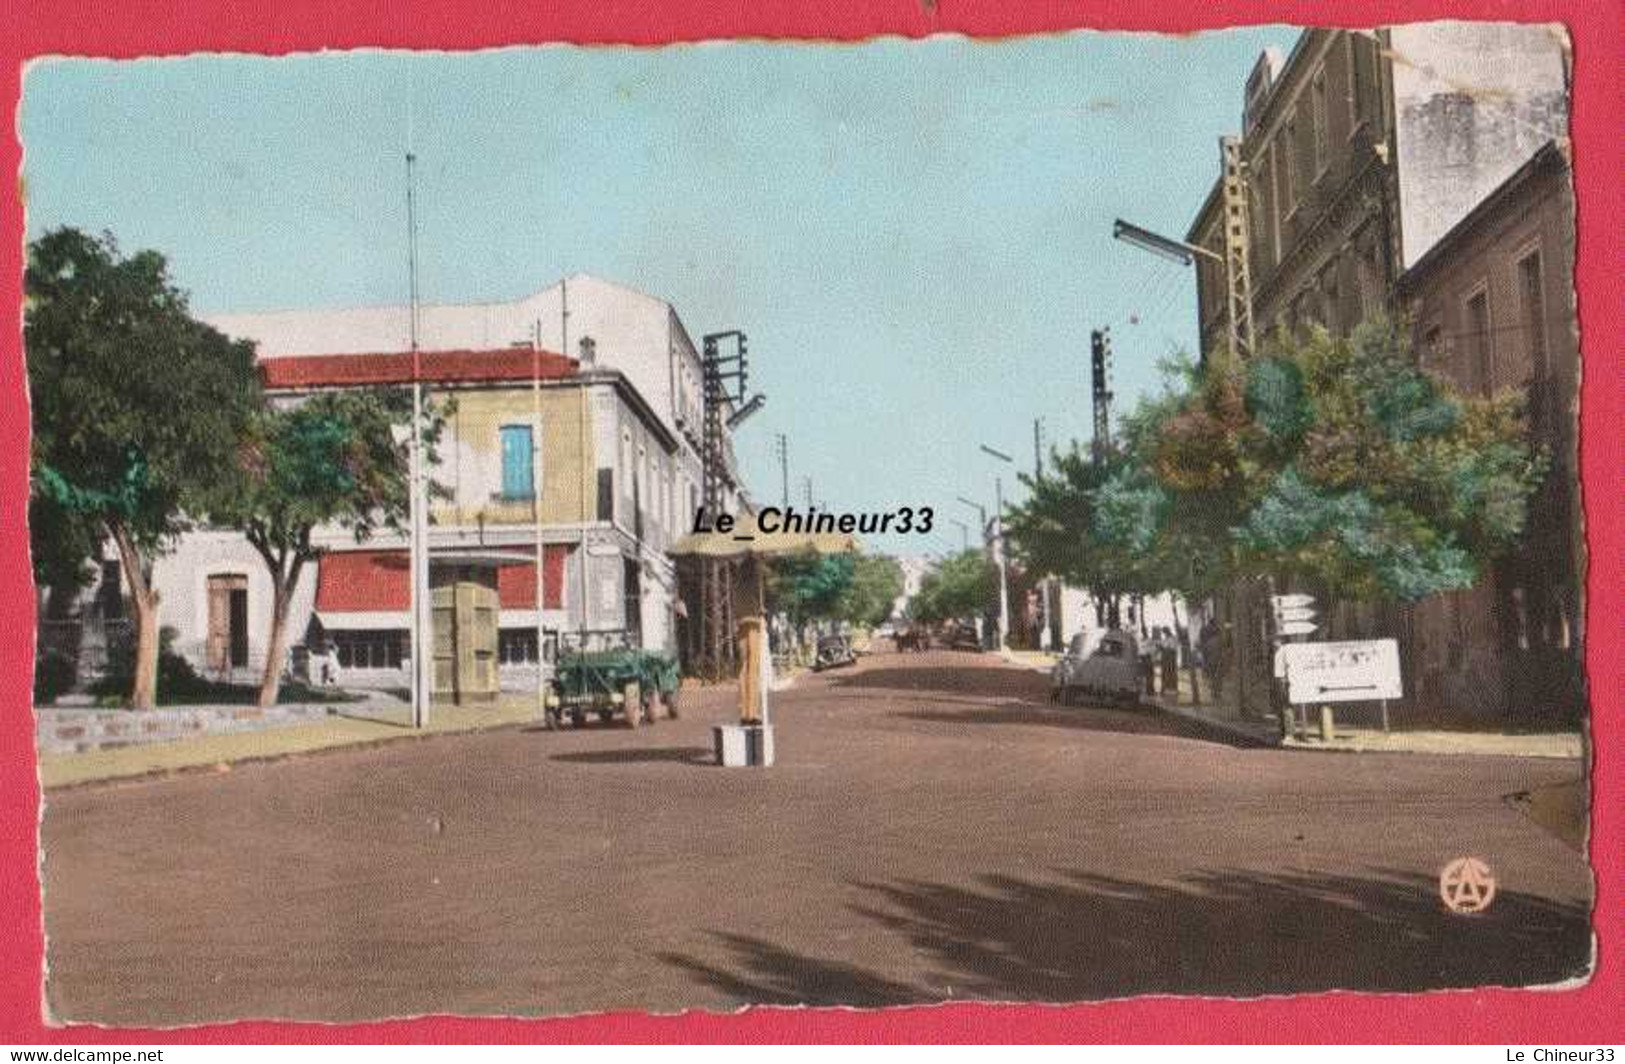 ALGERIE---SAIDA---L'Avenue Foch---cpsm Pf----colorisée - Saïda